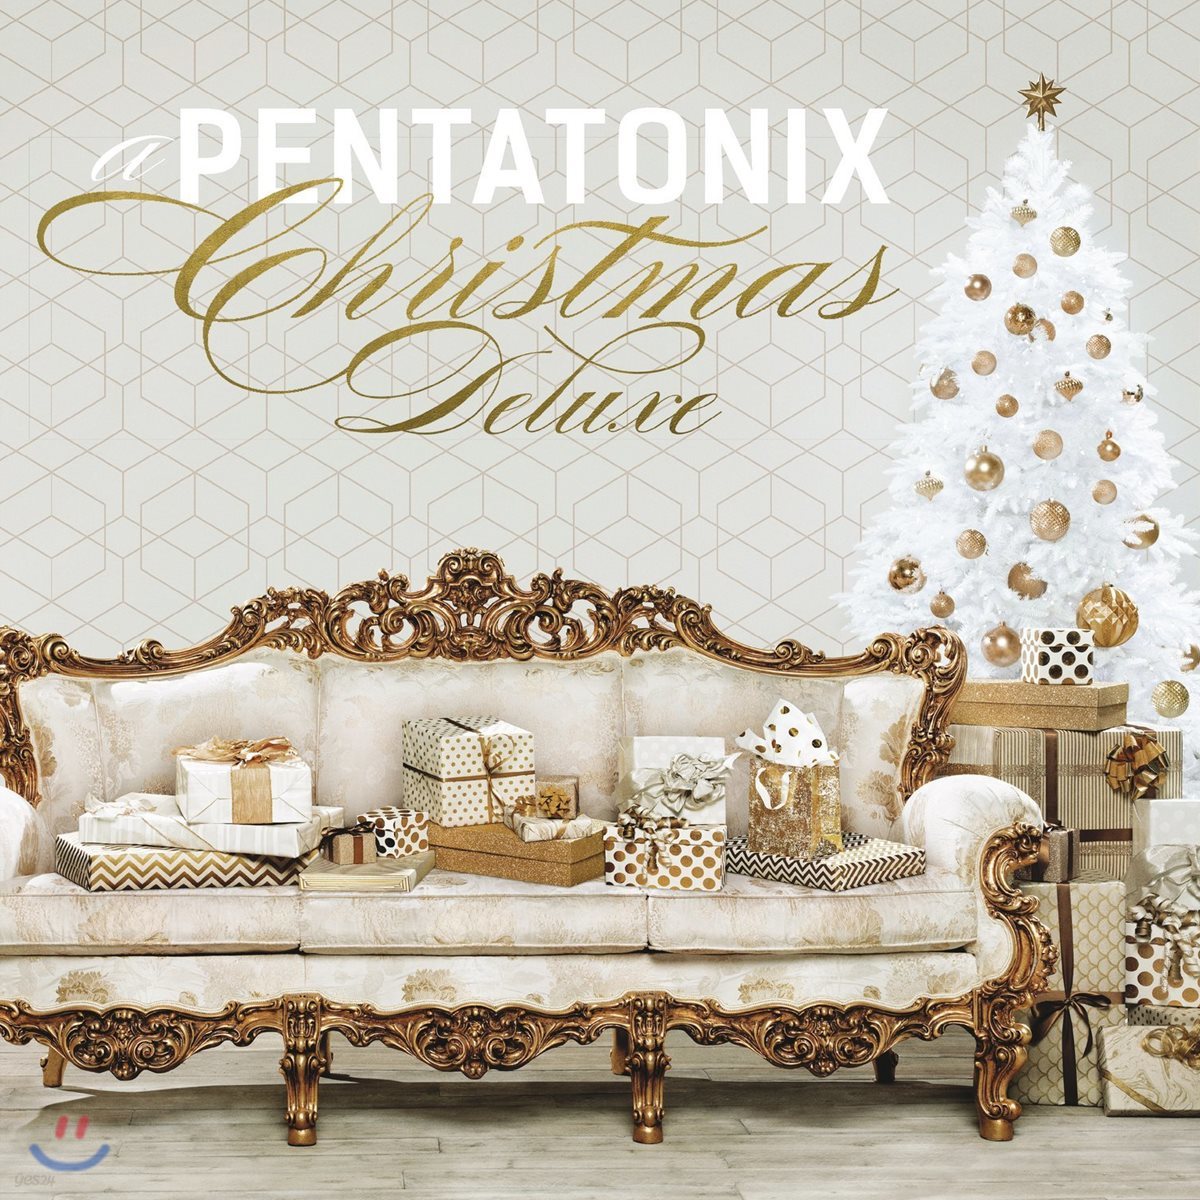 Pentatonix (펜타토닉스) - A Pentatonix Christmas Deluxe (크리스마스 앨범) [2 LP Deluxe Edition]